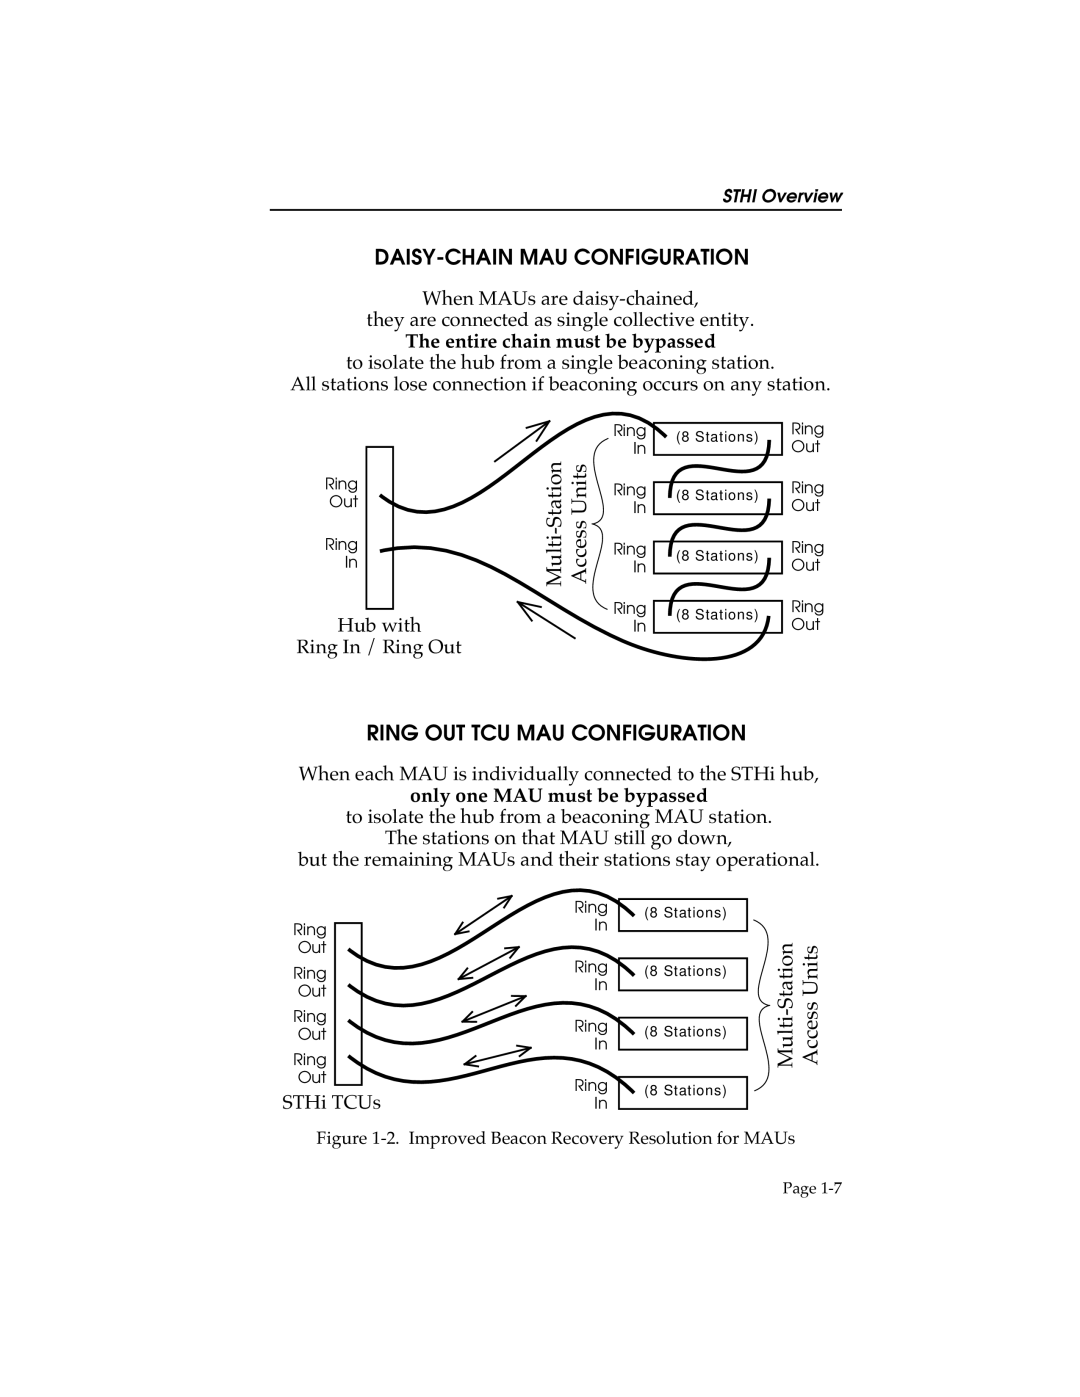 Cabletron Systems STHI manual Daisy-Chain Mau Configuration, Ring Out Tcu Mau Configuration, Multi-Station, Access Units 